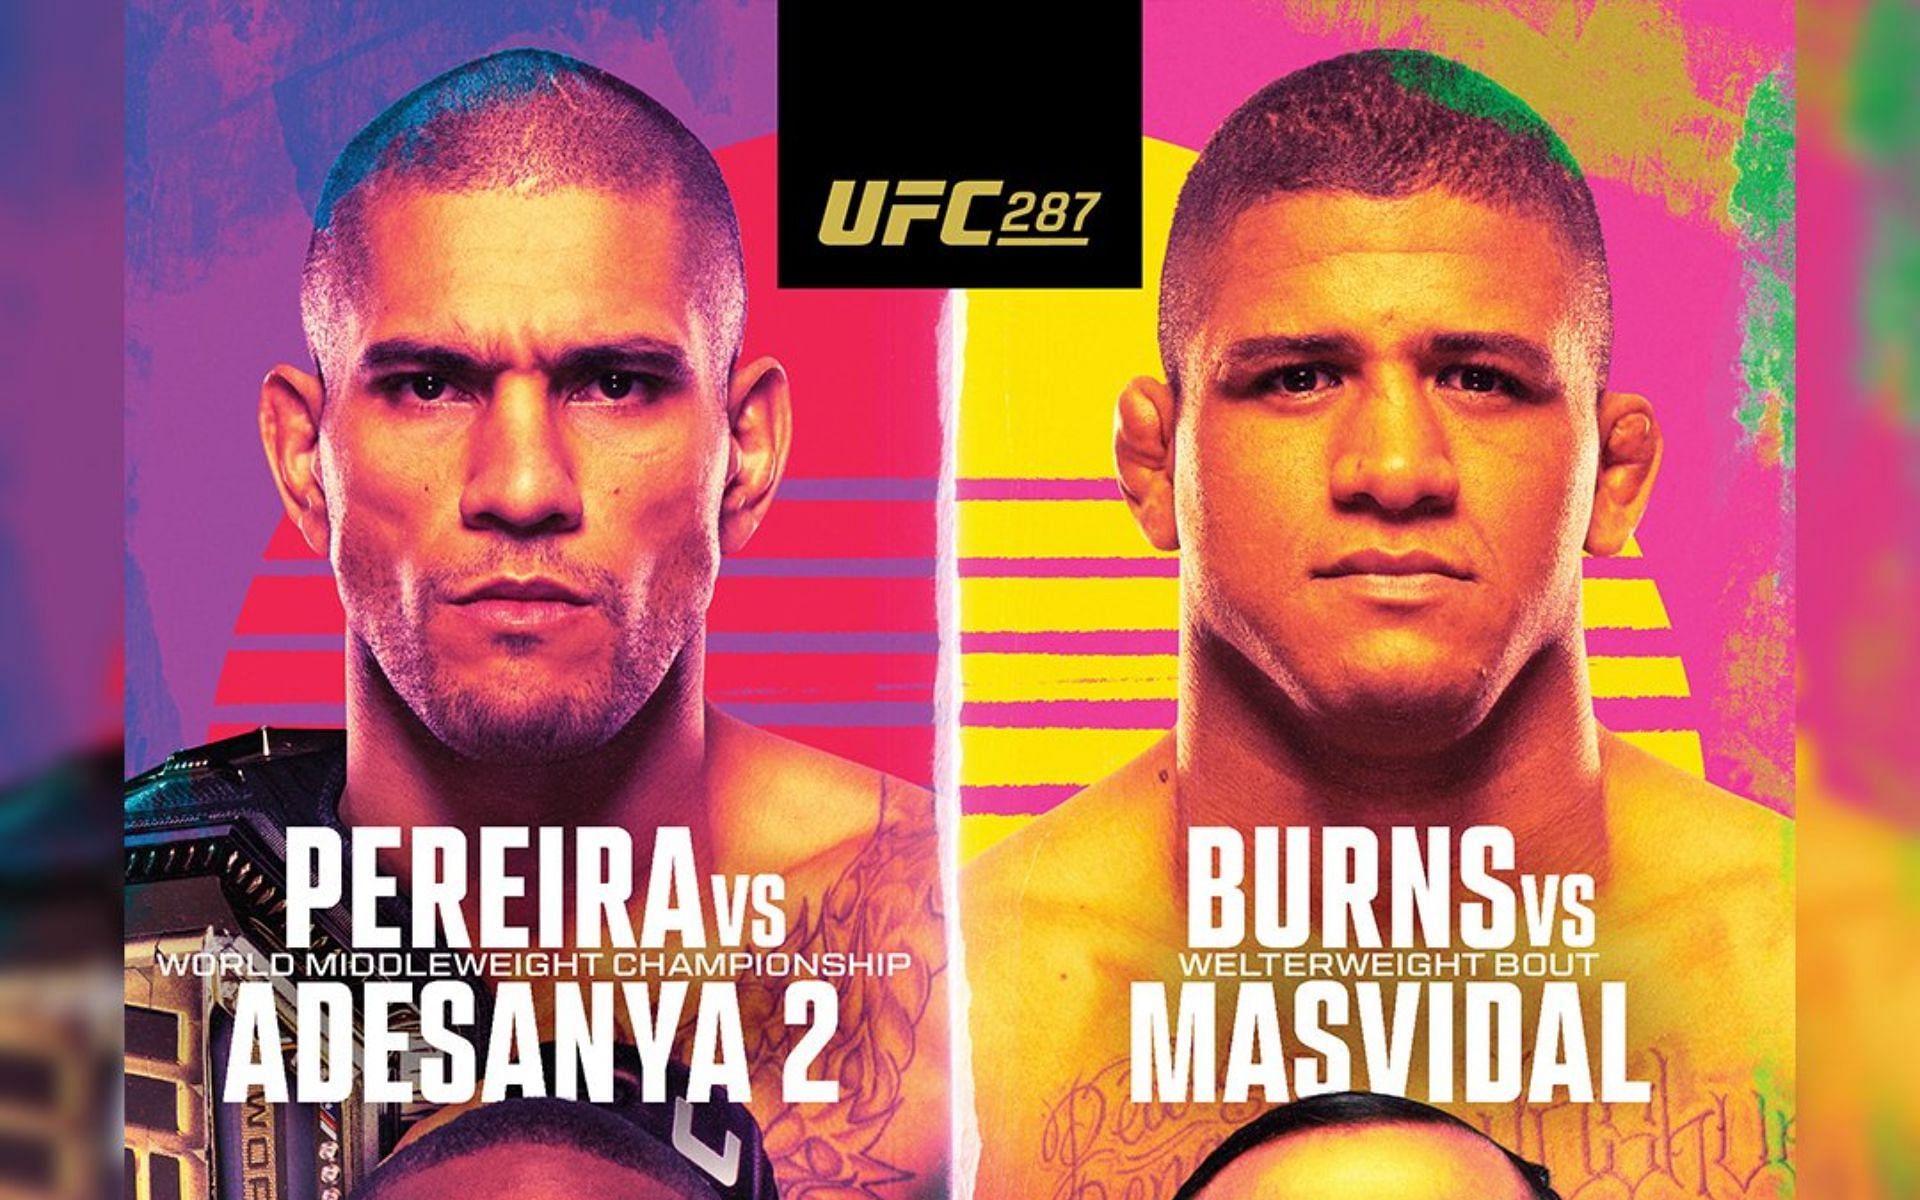 UFC 287 official poster [Photo credit @ufc - Twitter]